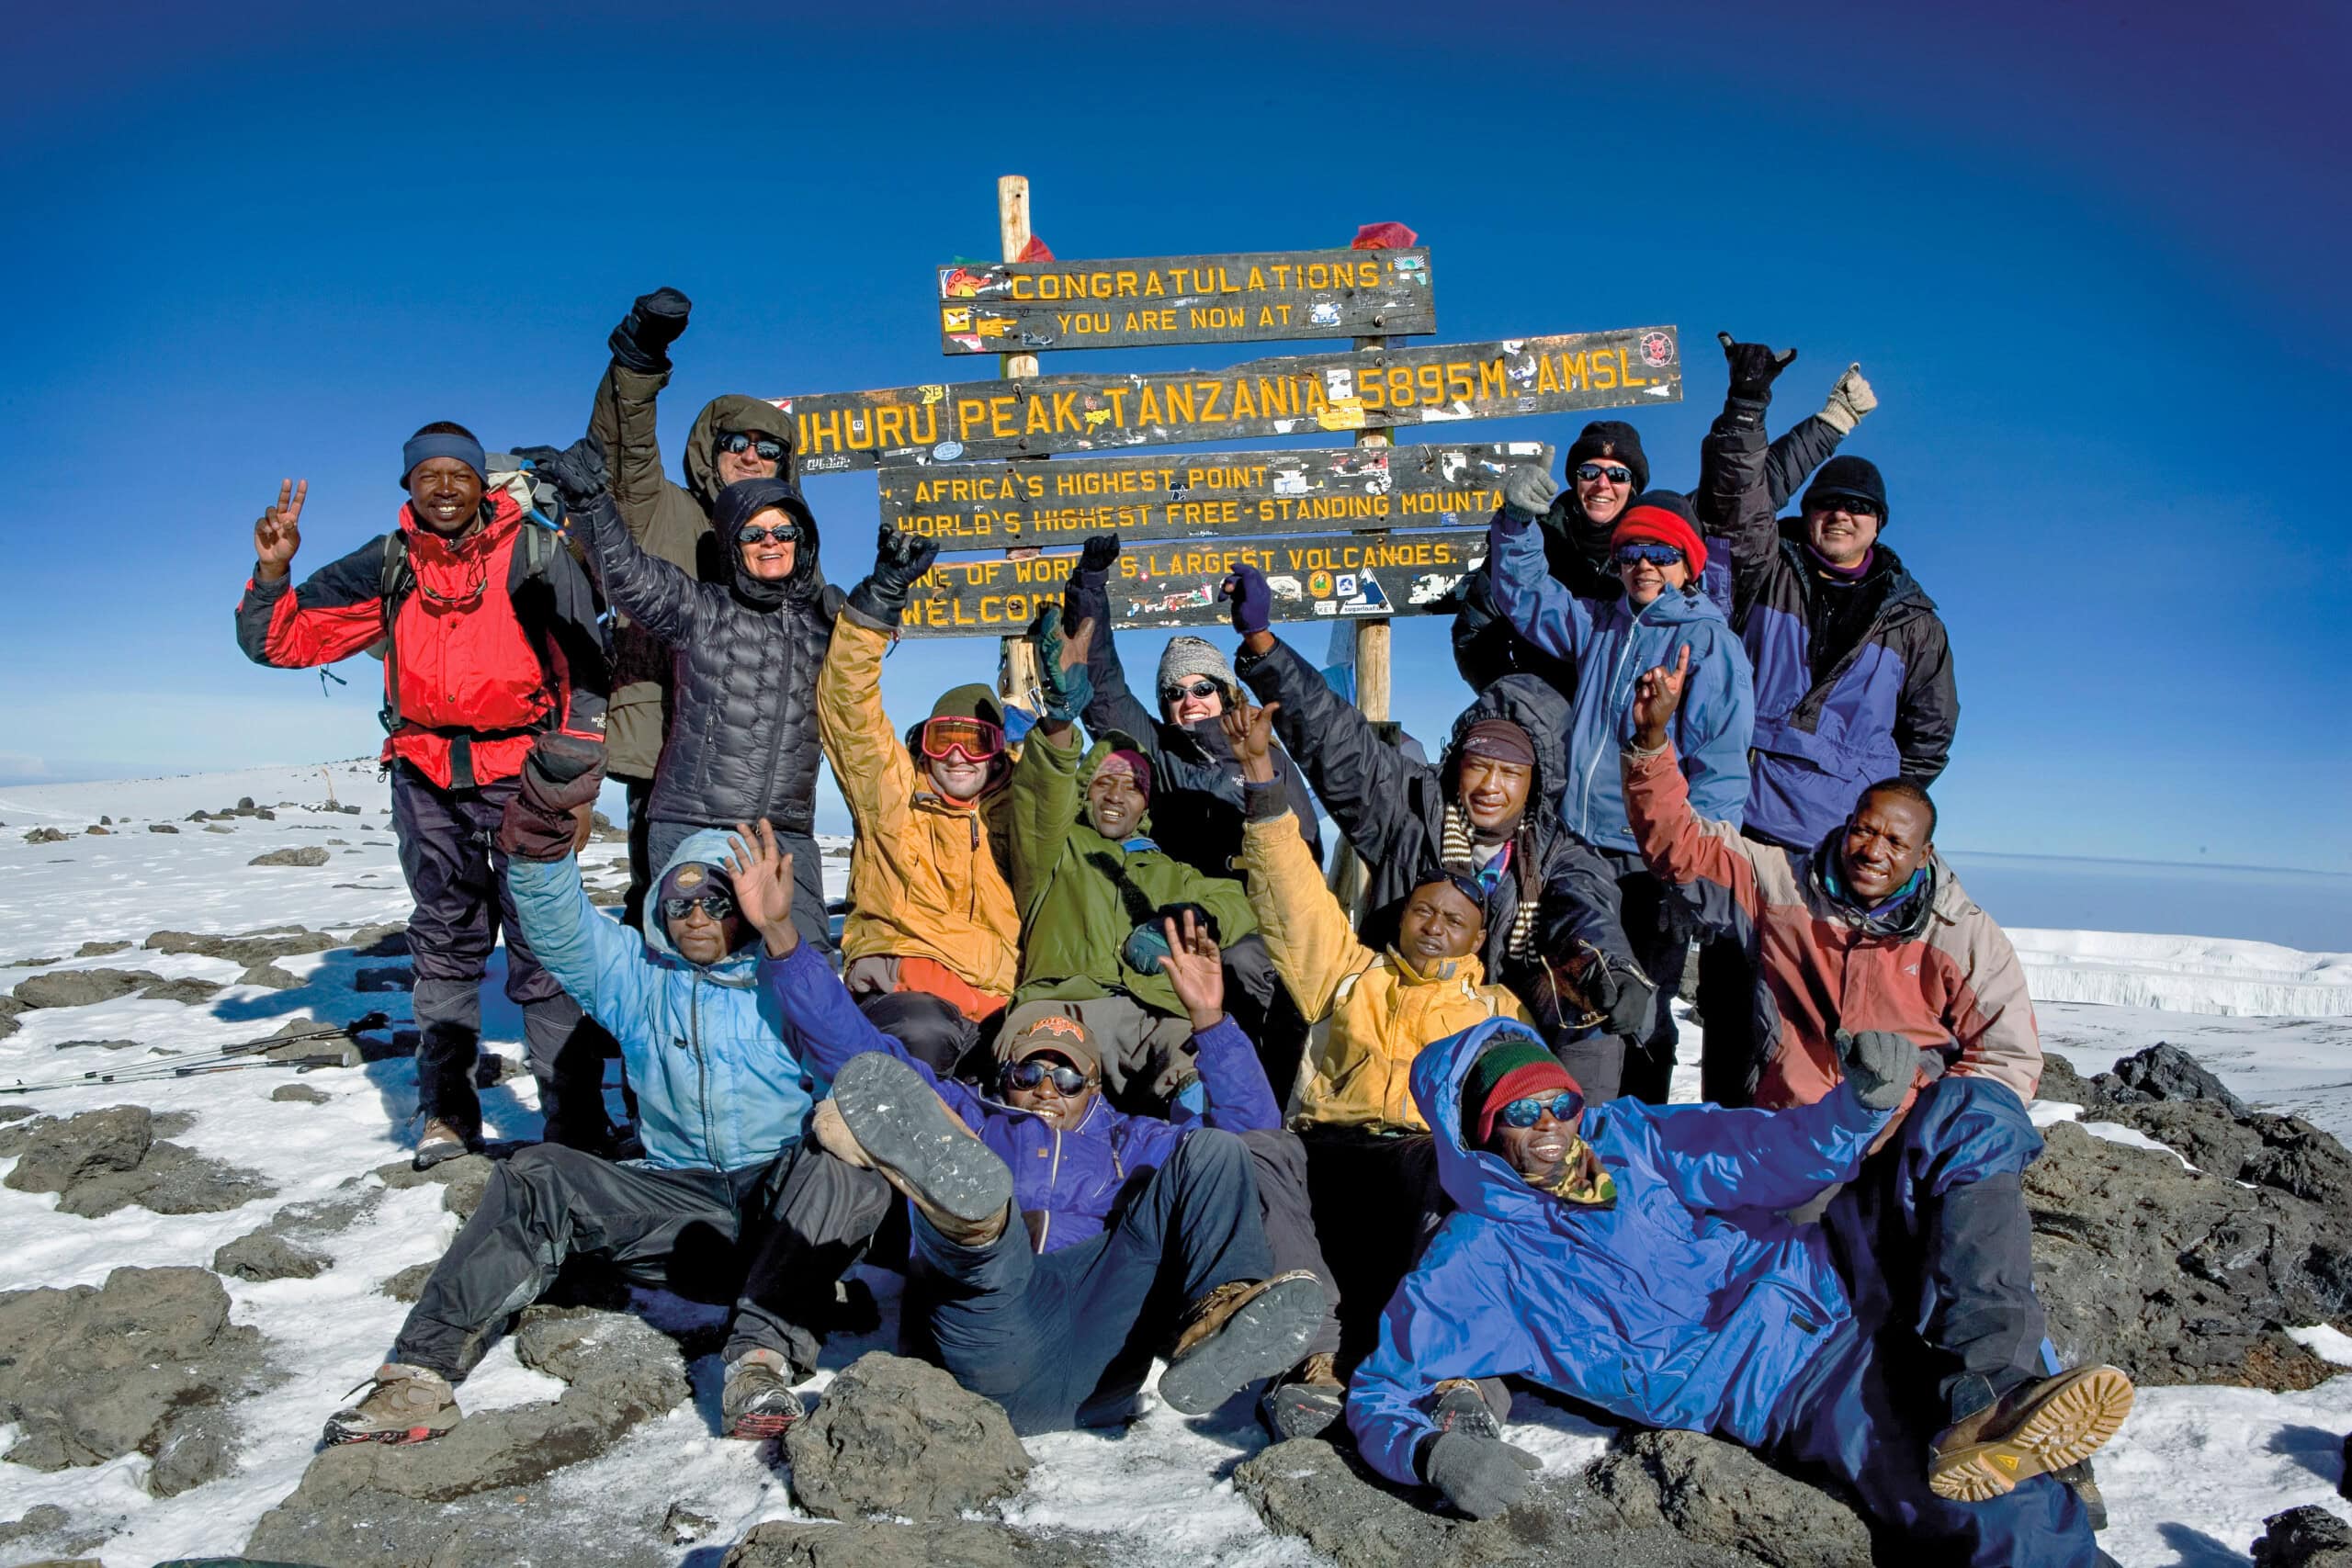 https://www.wildernesstravel.com/wp-content/uploads/2023/06/11-KILSHIRA-group-of-climbers-kilimanjaro-summit-uhuru-peak-tanzania-scaled.jpg